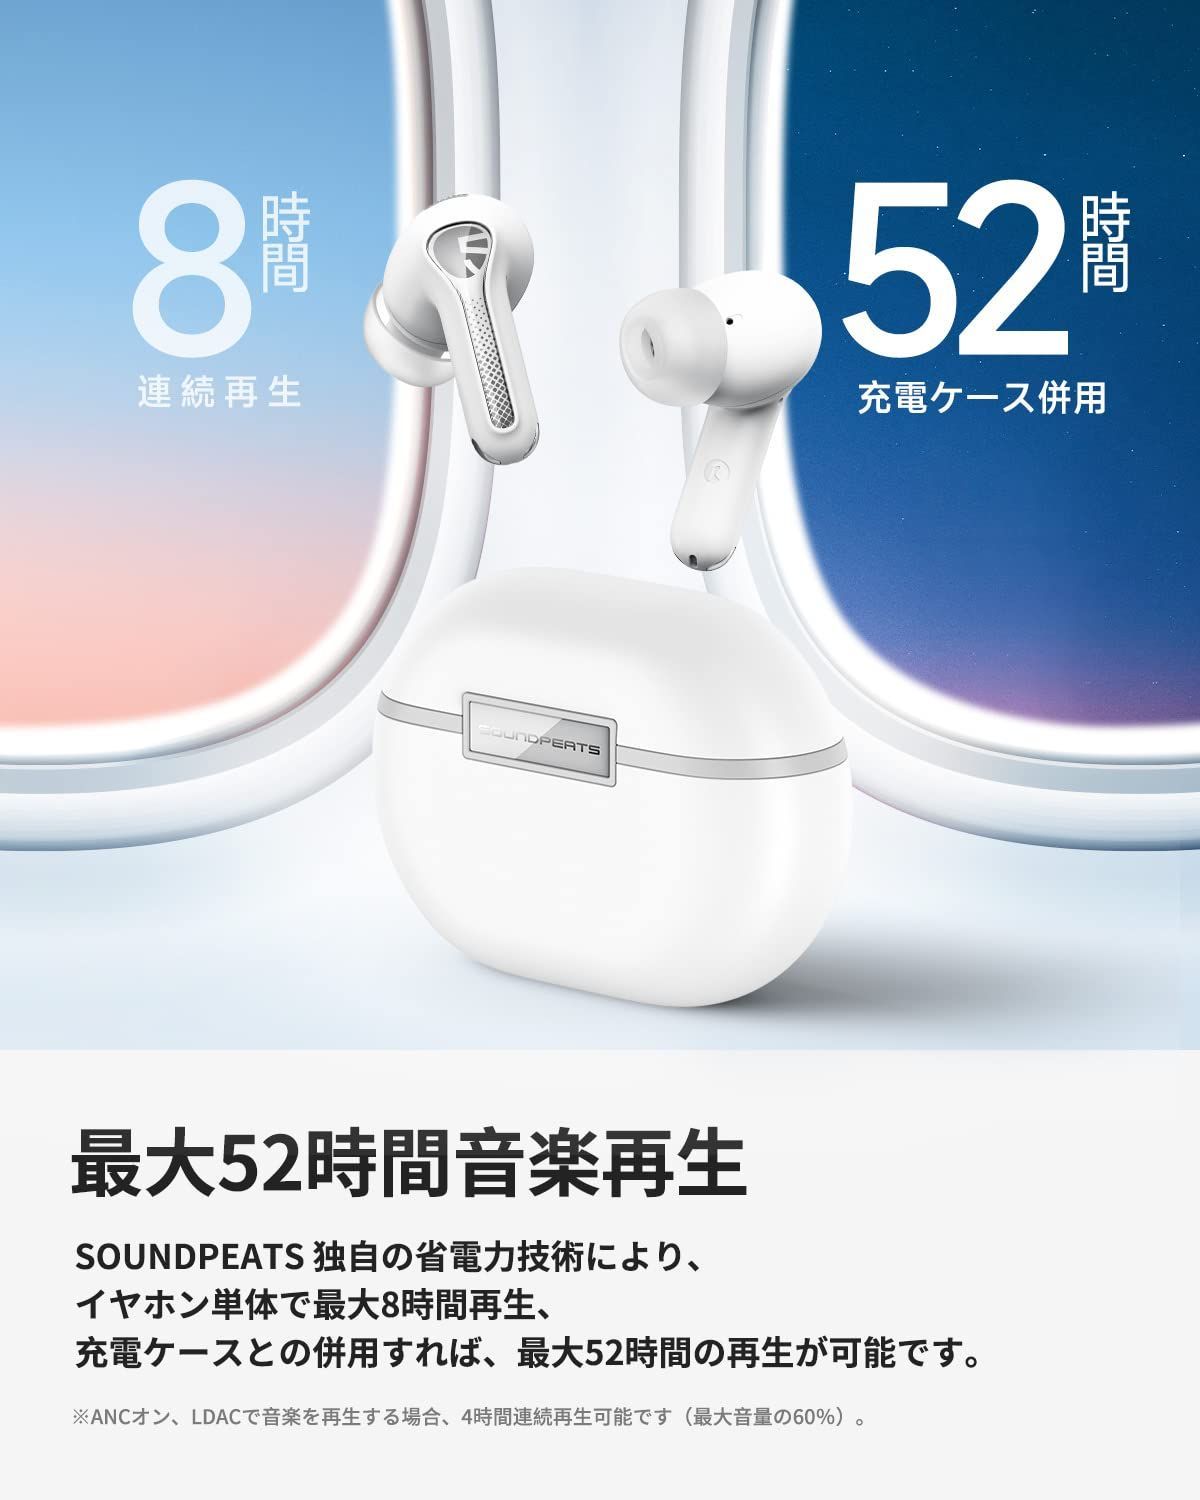 SOUNDPEATS Capsule3 Pro ワイヤレスイヤホン ハイレゾイヤ